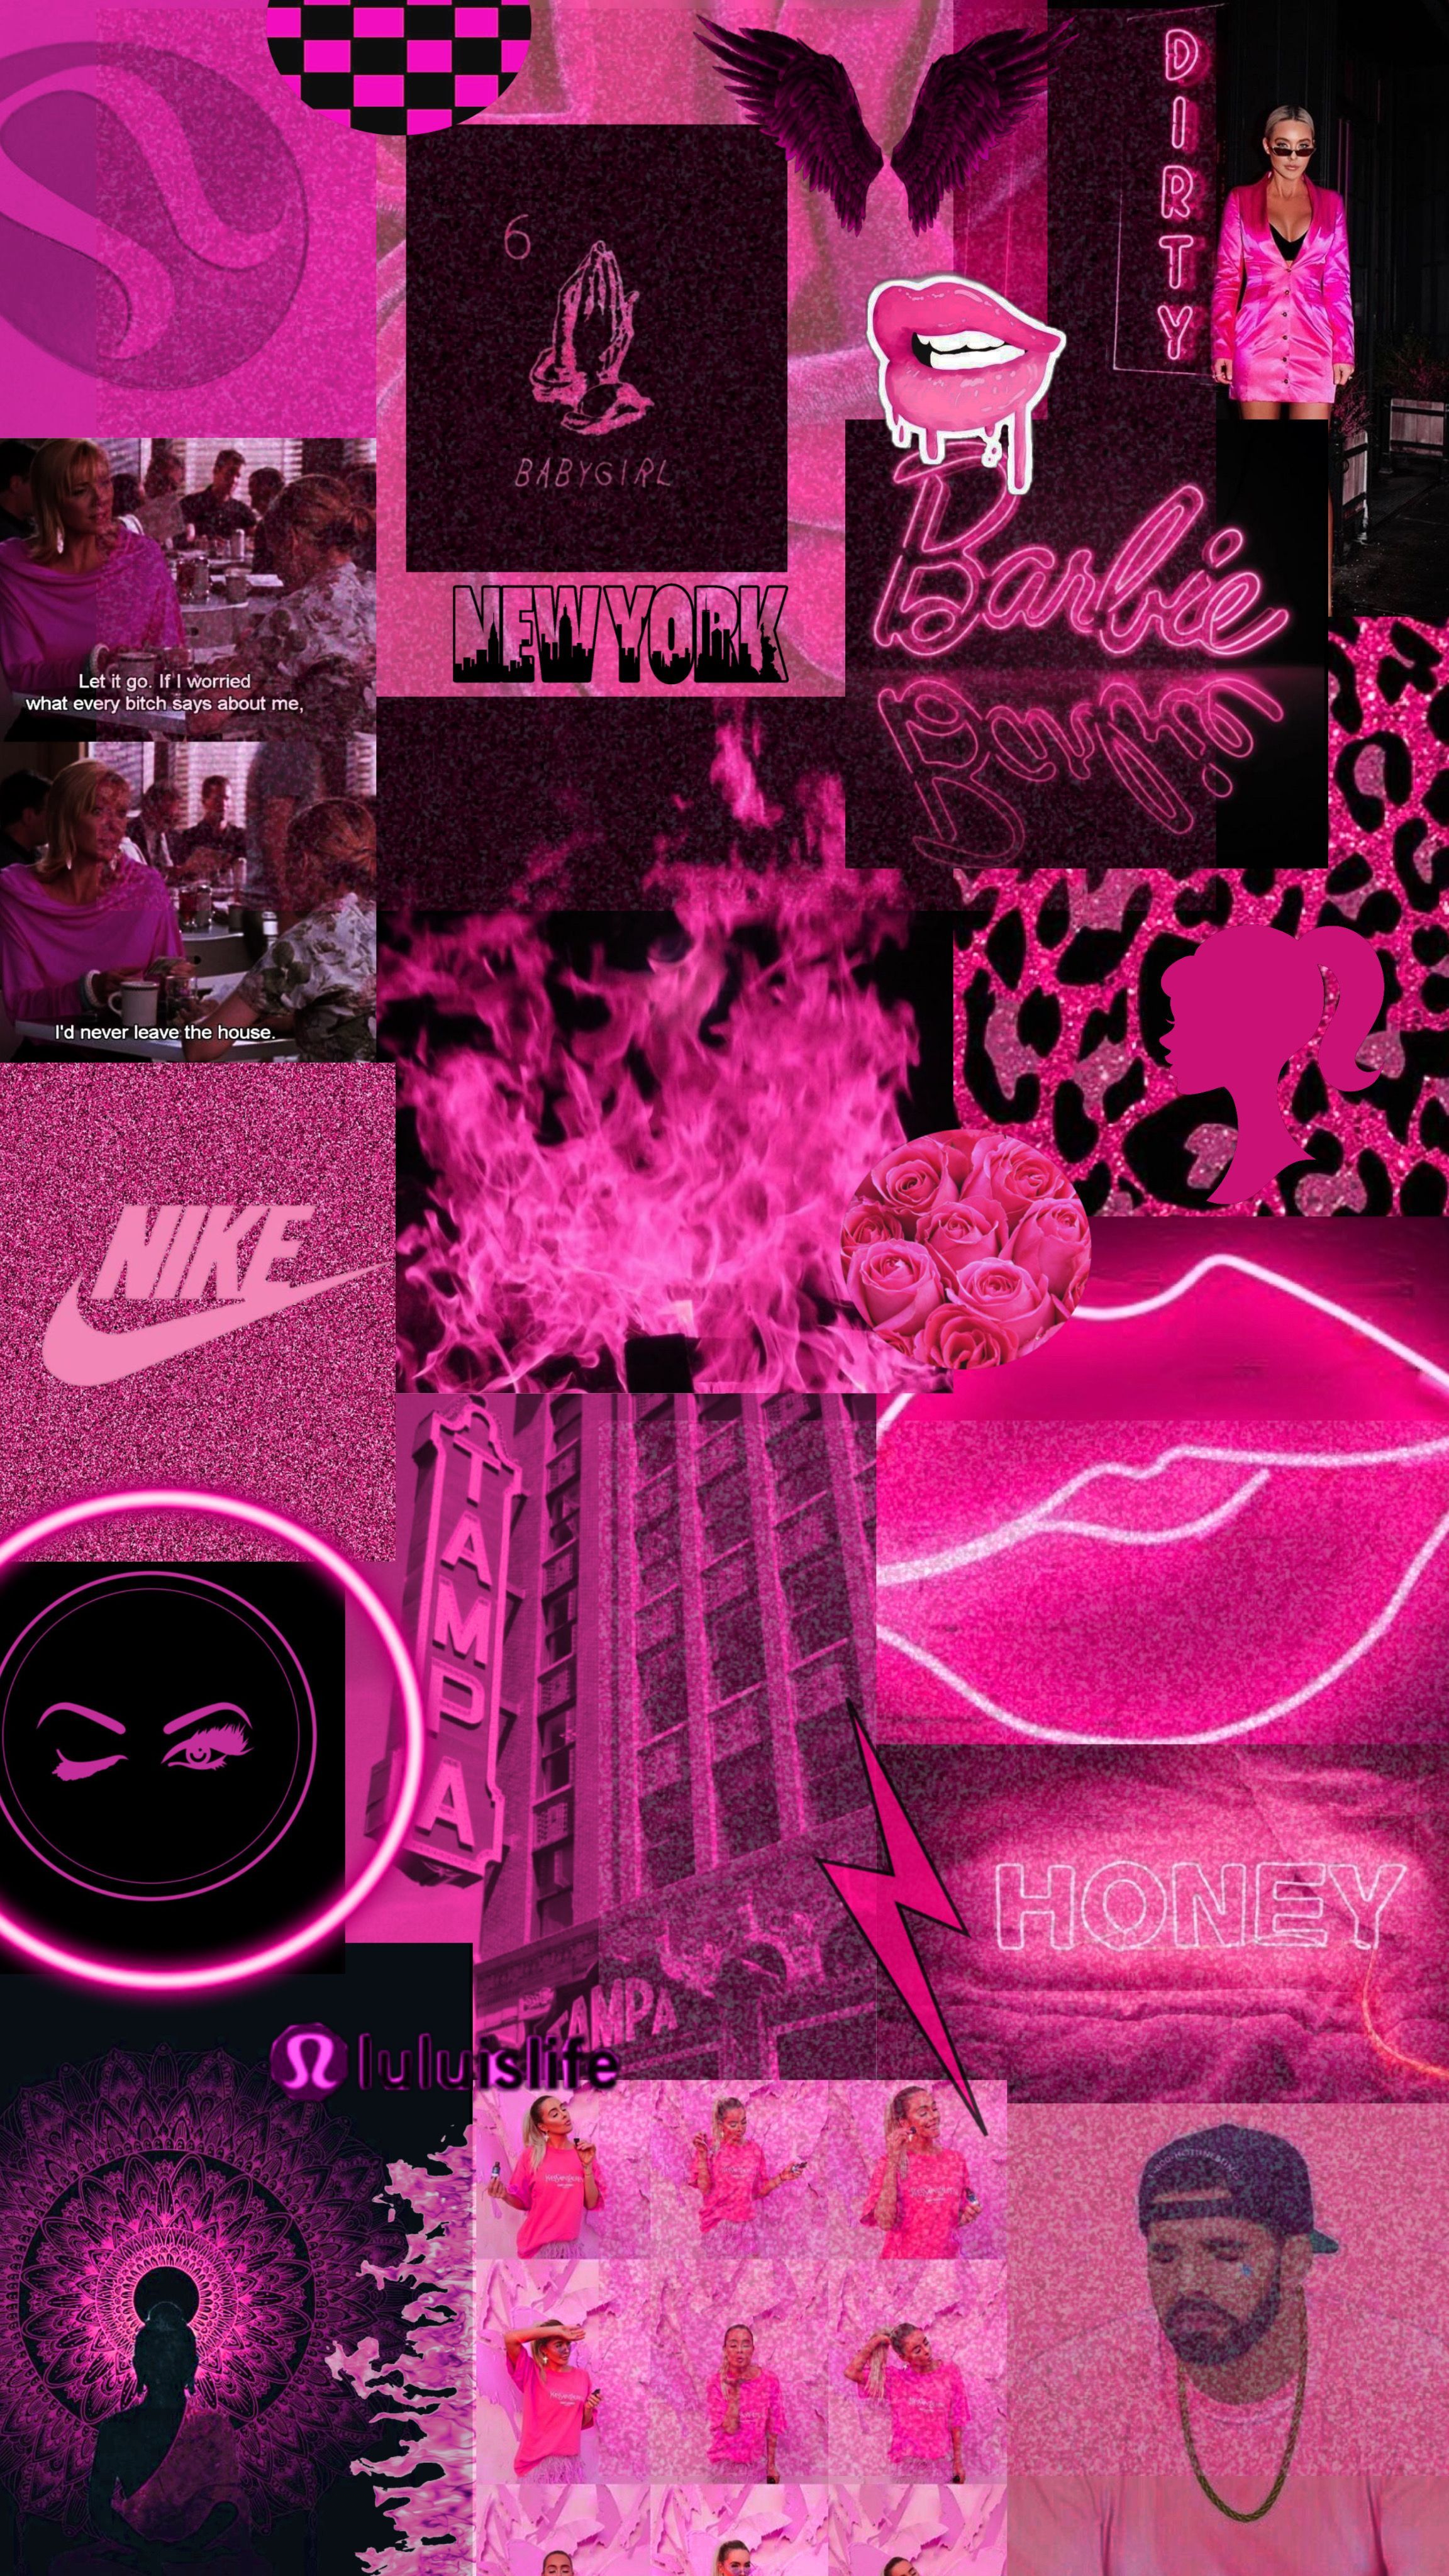 Aggregate 83+ dark pink aesthetic wallpaper - 3tdesign.edu.vn